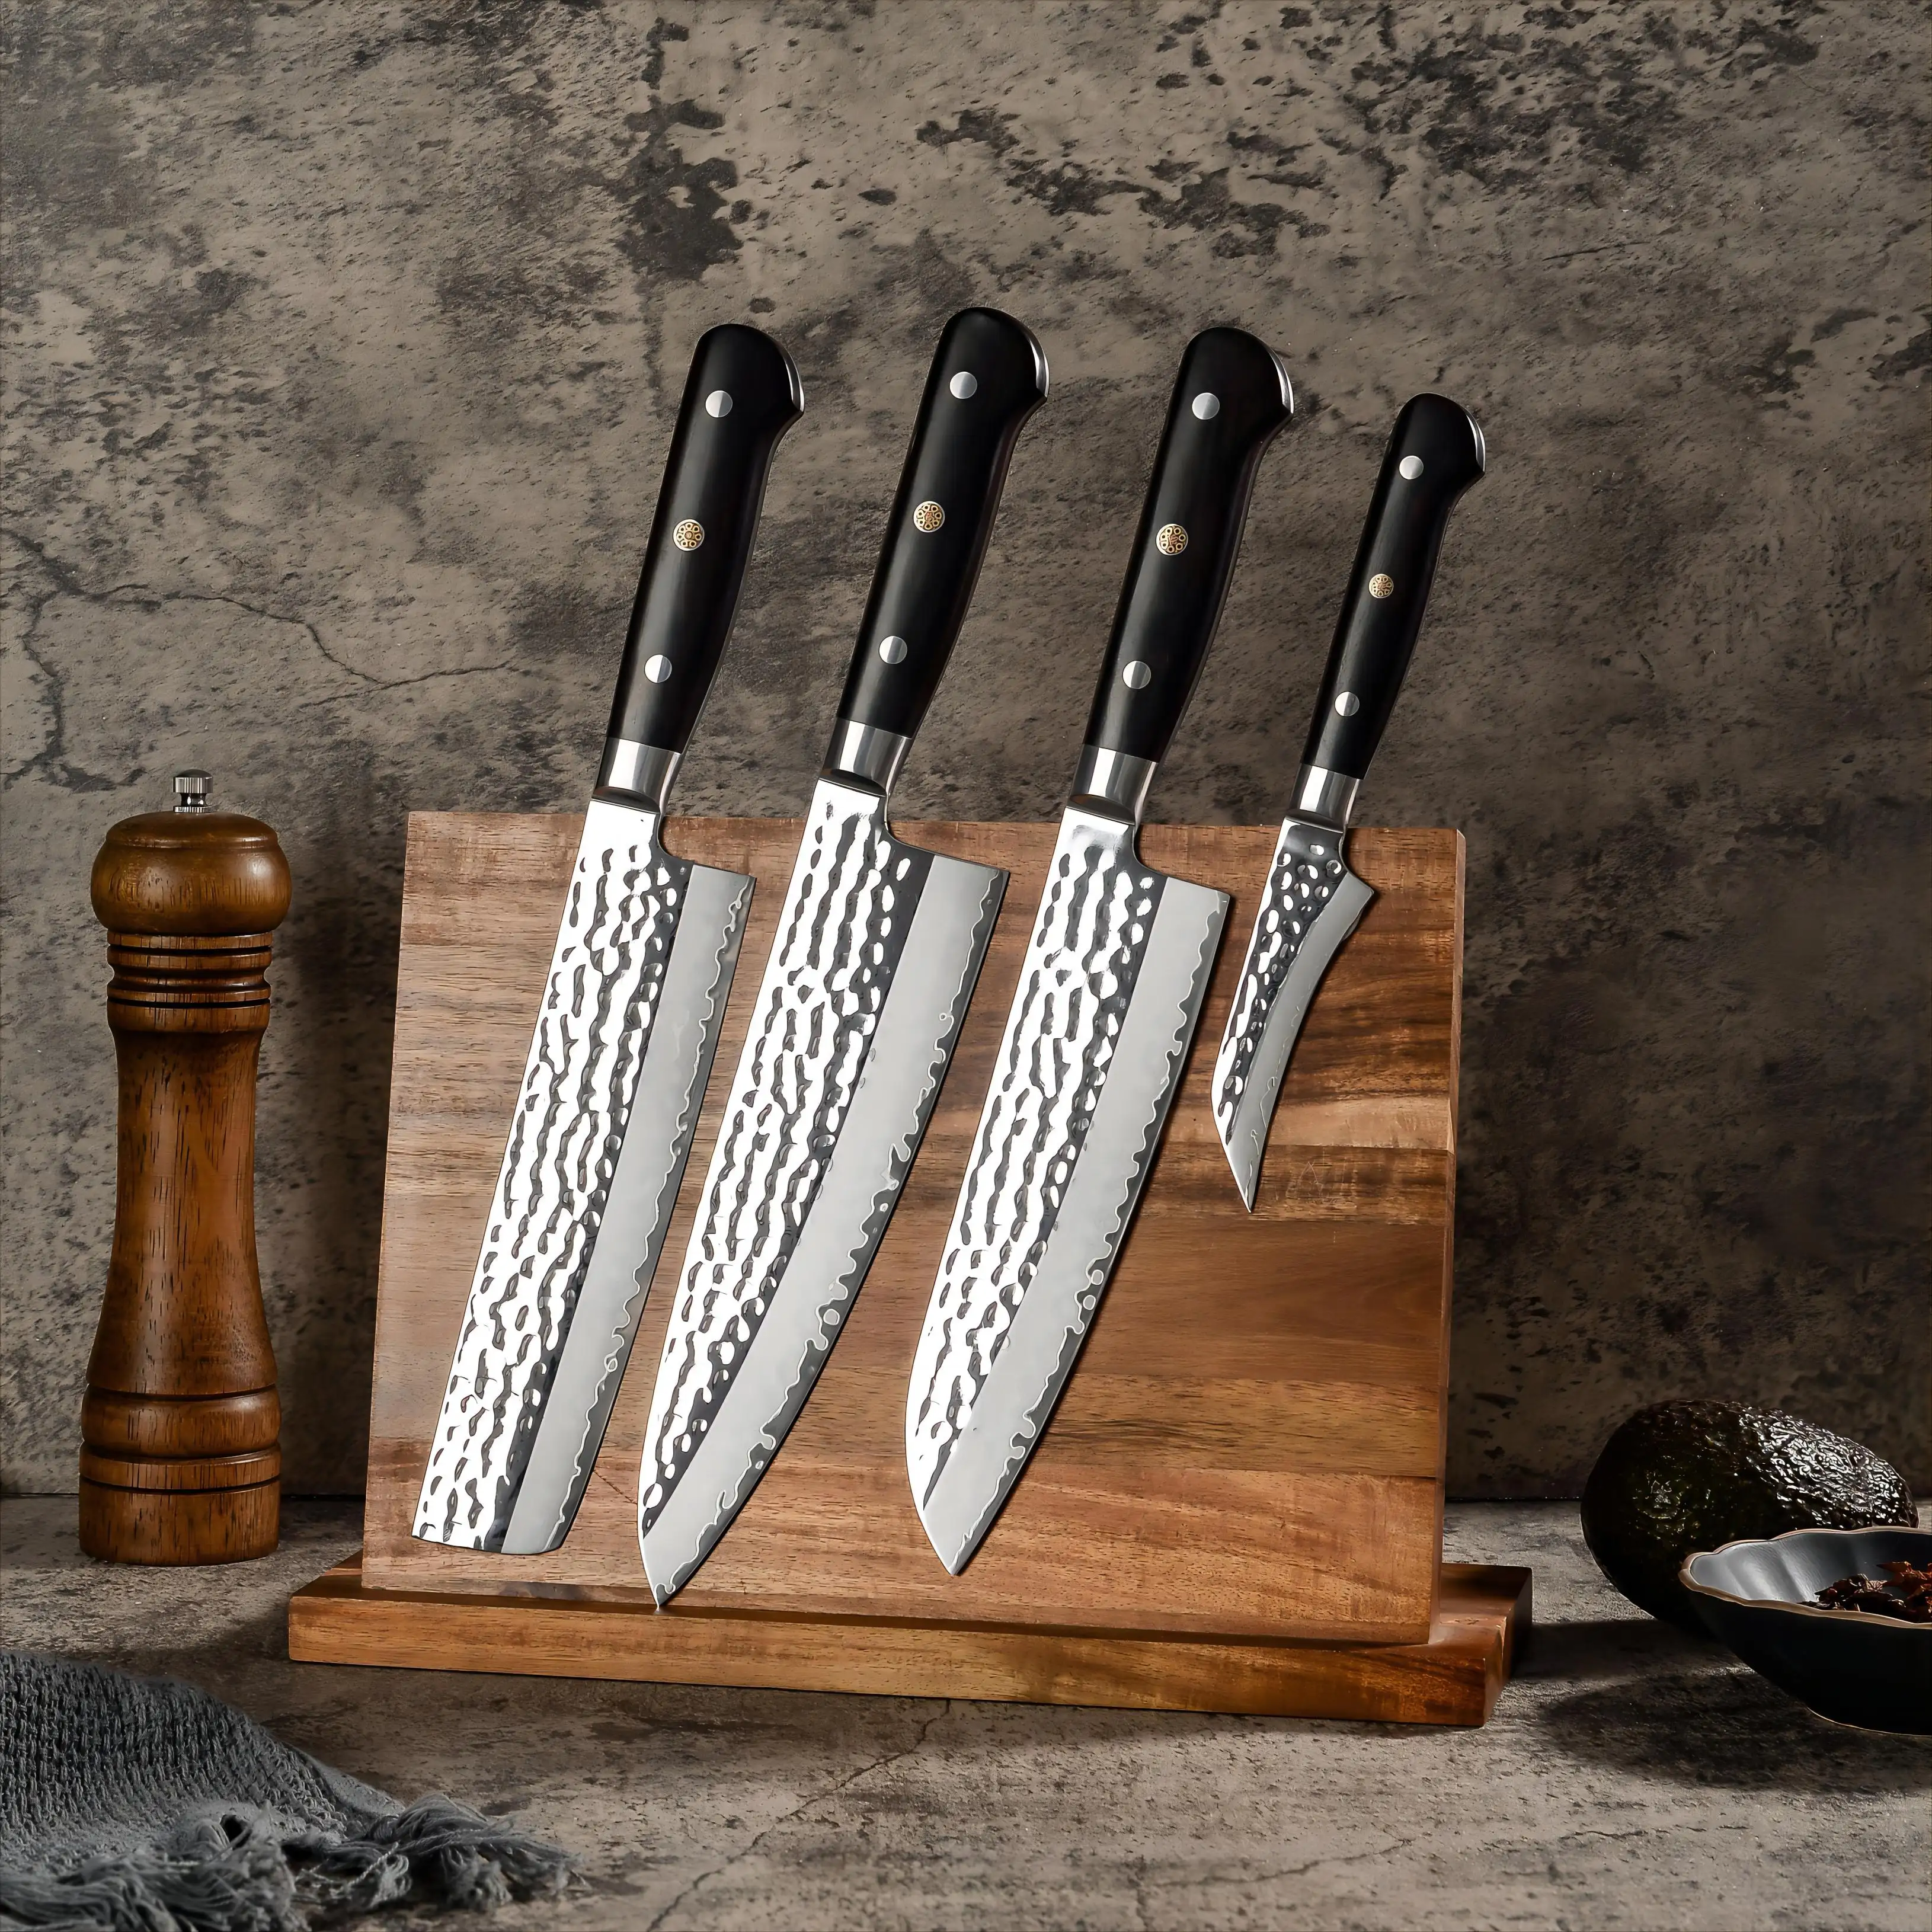 AMSZL Multiple Sizes High Carbon Stainless Steel Japanese Knife Sets Ultra Sharp Knives Set for Kitchen